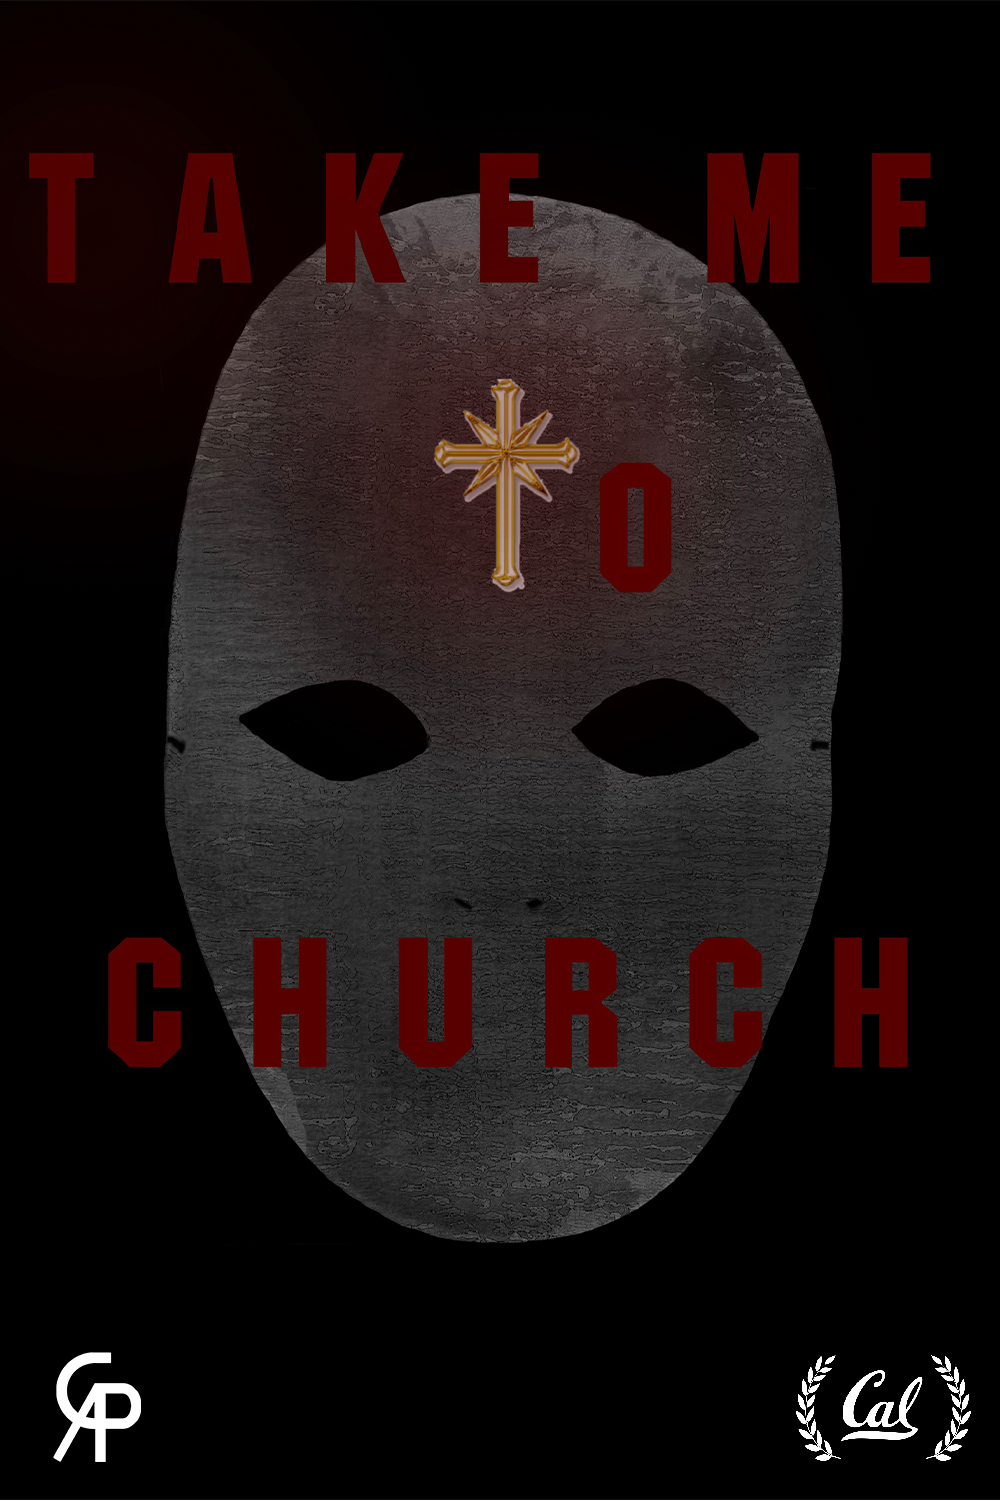 Take Me to Church